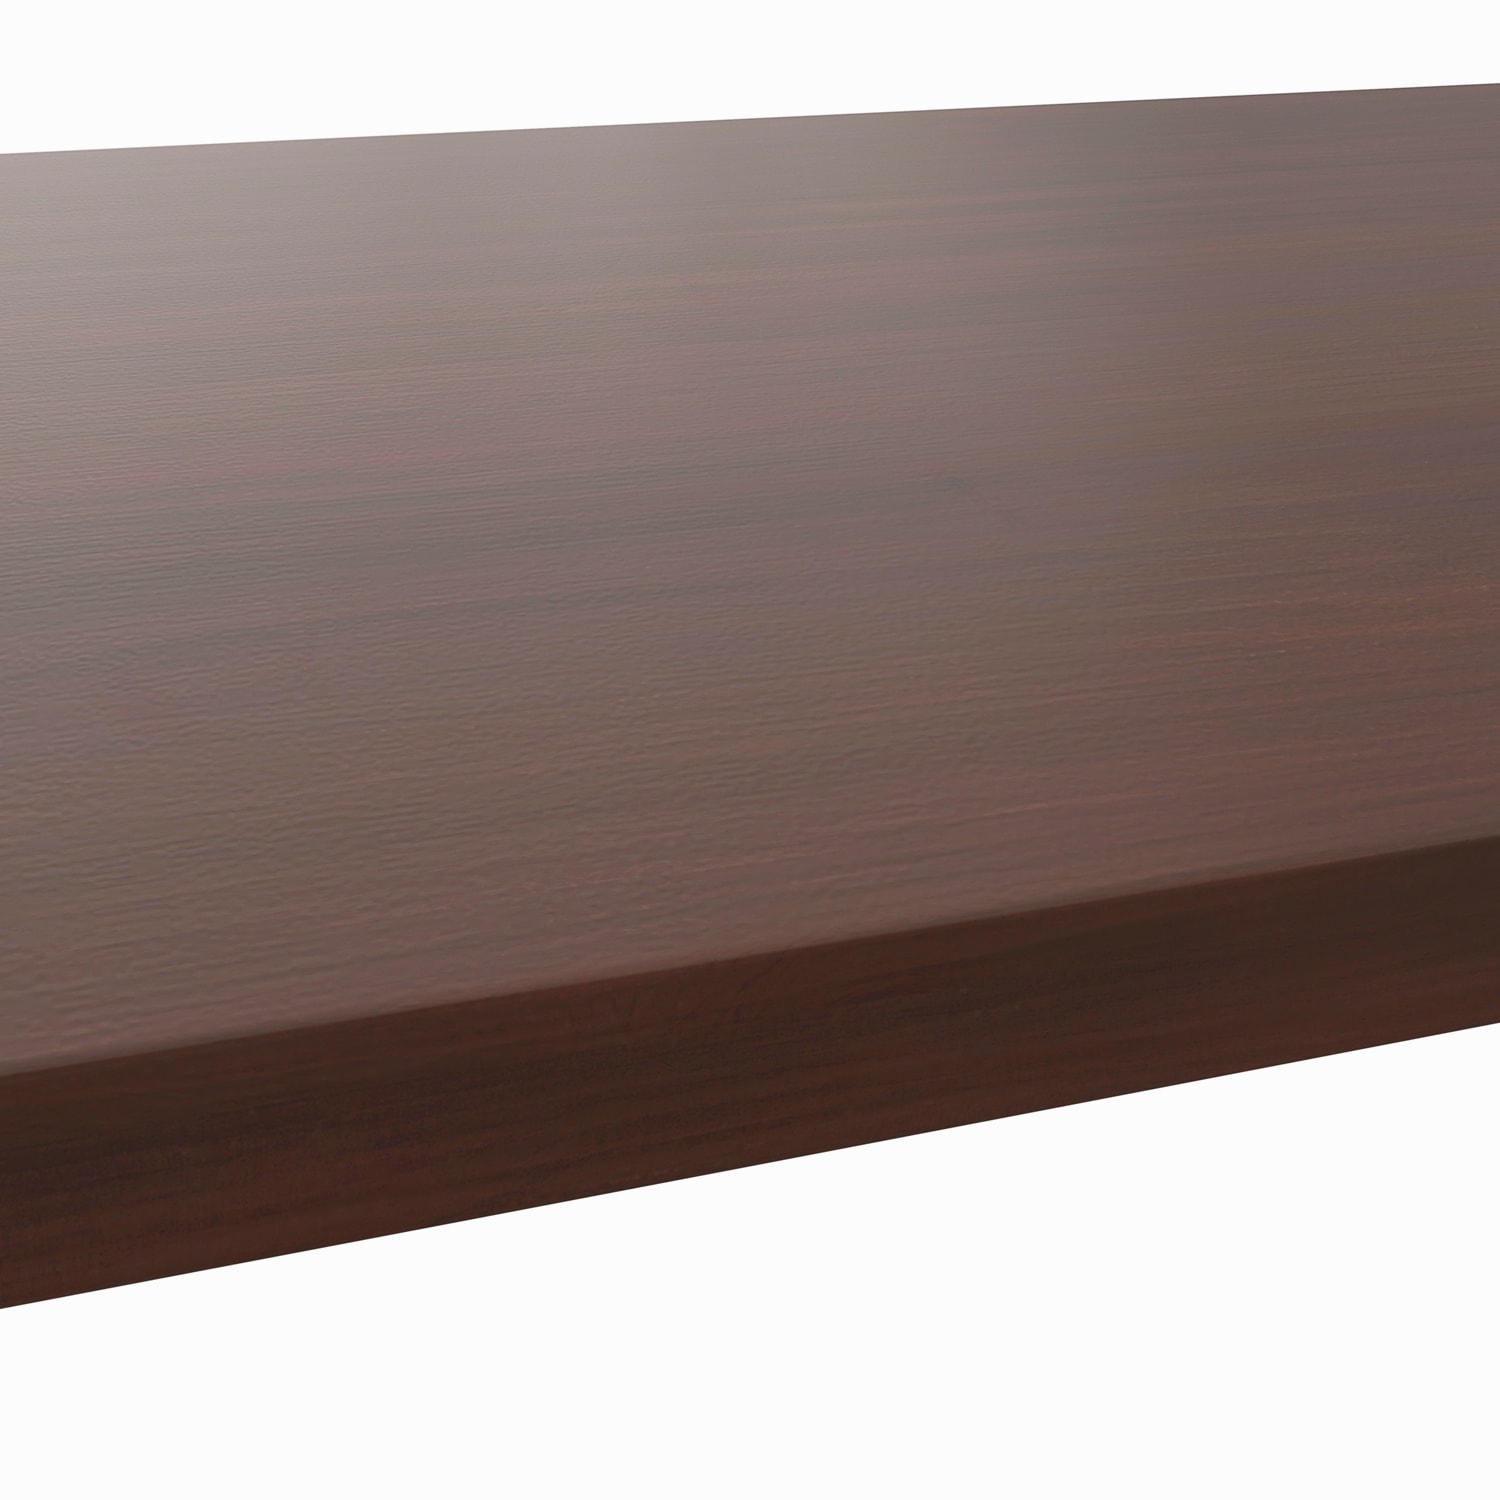 Wilsonart 3 ft. x 8 ft. Laminate Sheet in Landmark Wood with Premium SoftGrain Finish